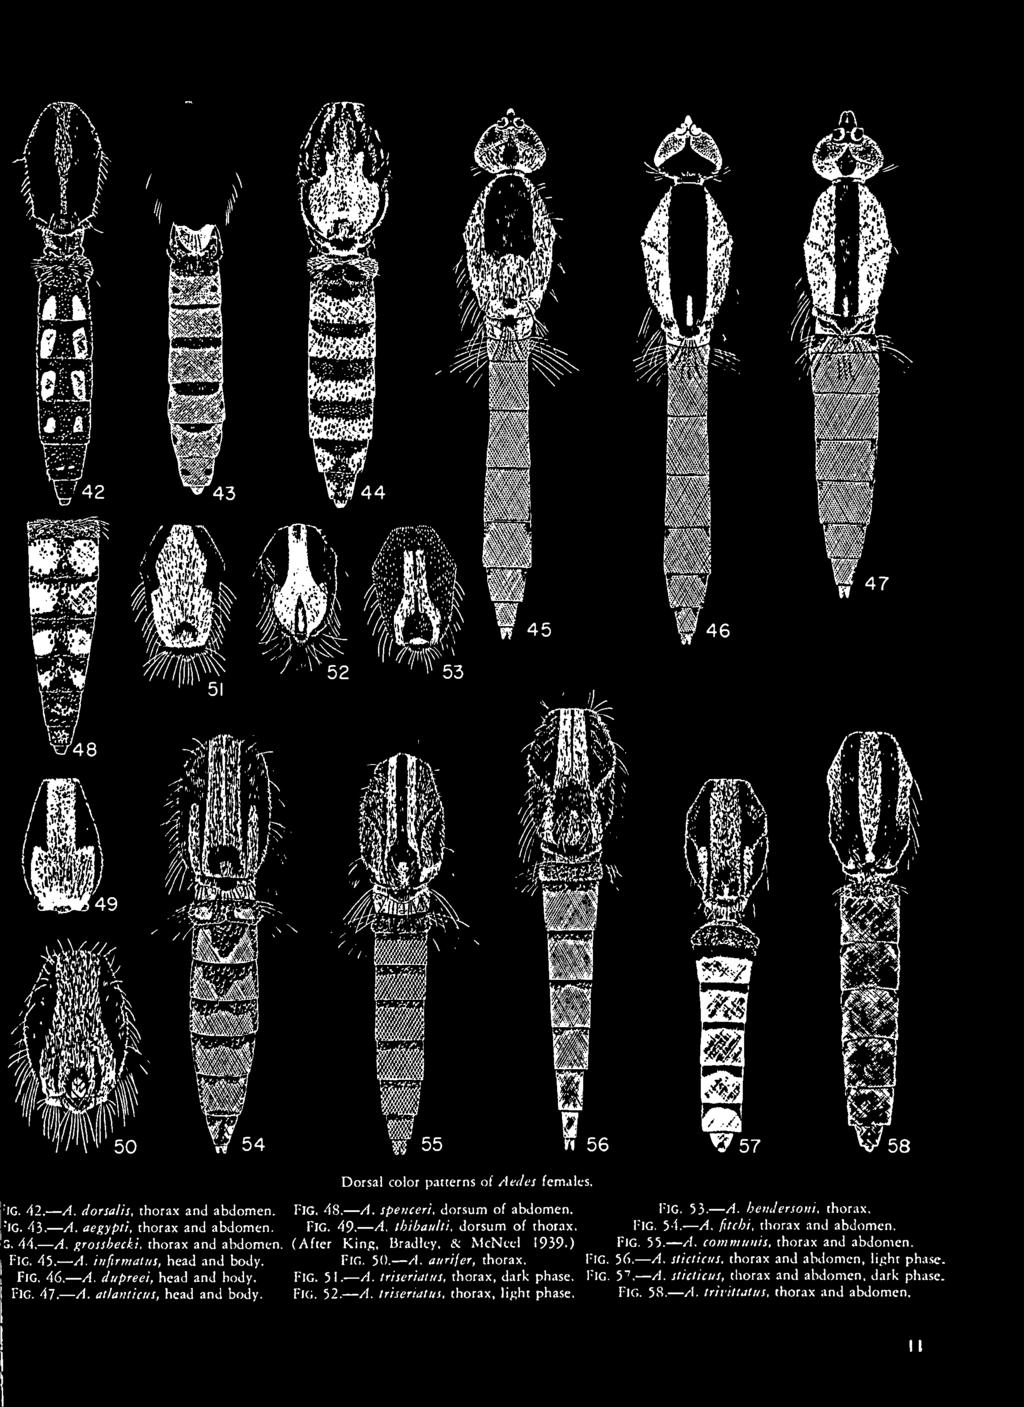 Fig. 46. A. dupreei, head and body. Fig. 51. A. triseriattis. thorax, dark phase. FlG. 57. A. sliclicus, thorax and abdomen, dark phase.